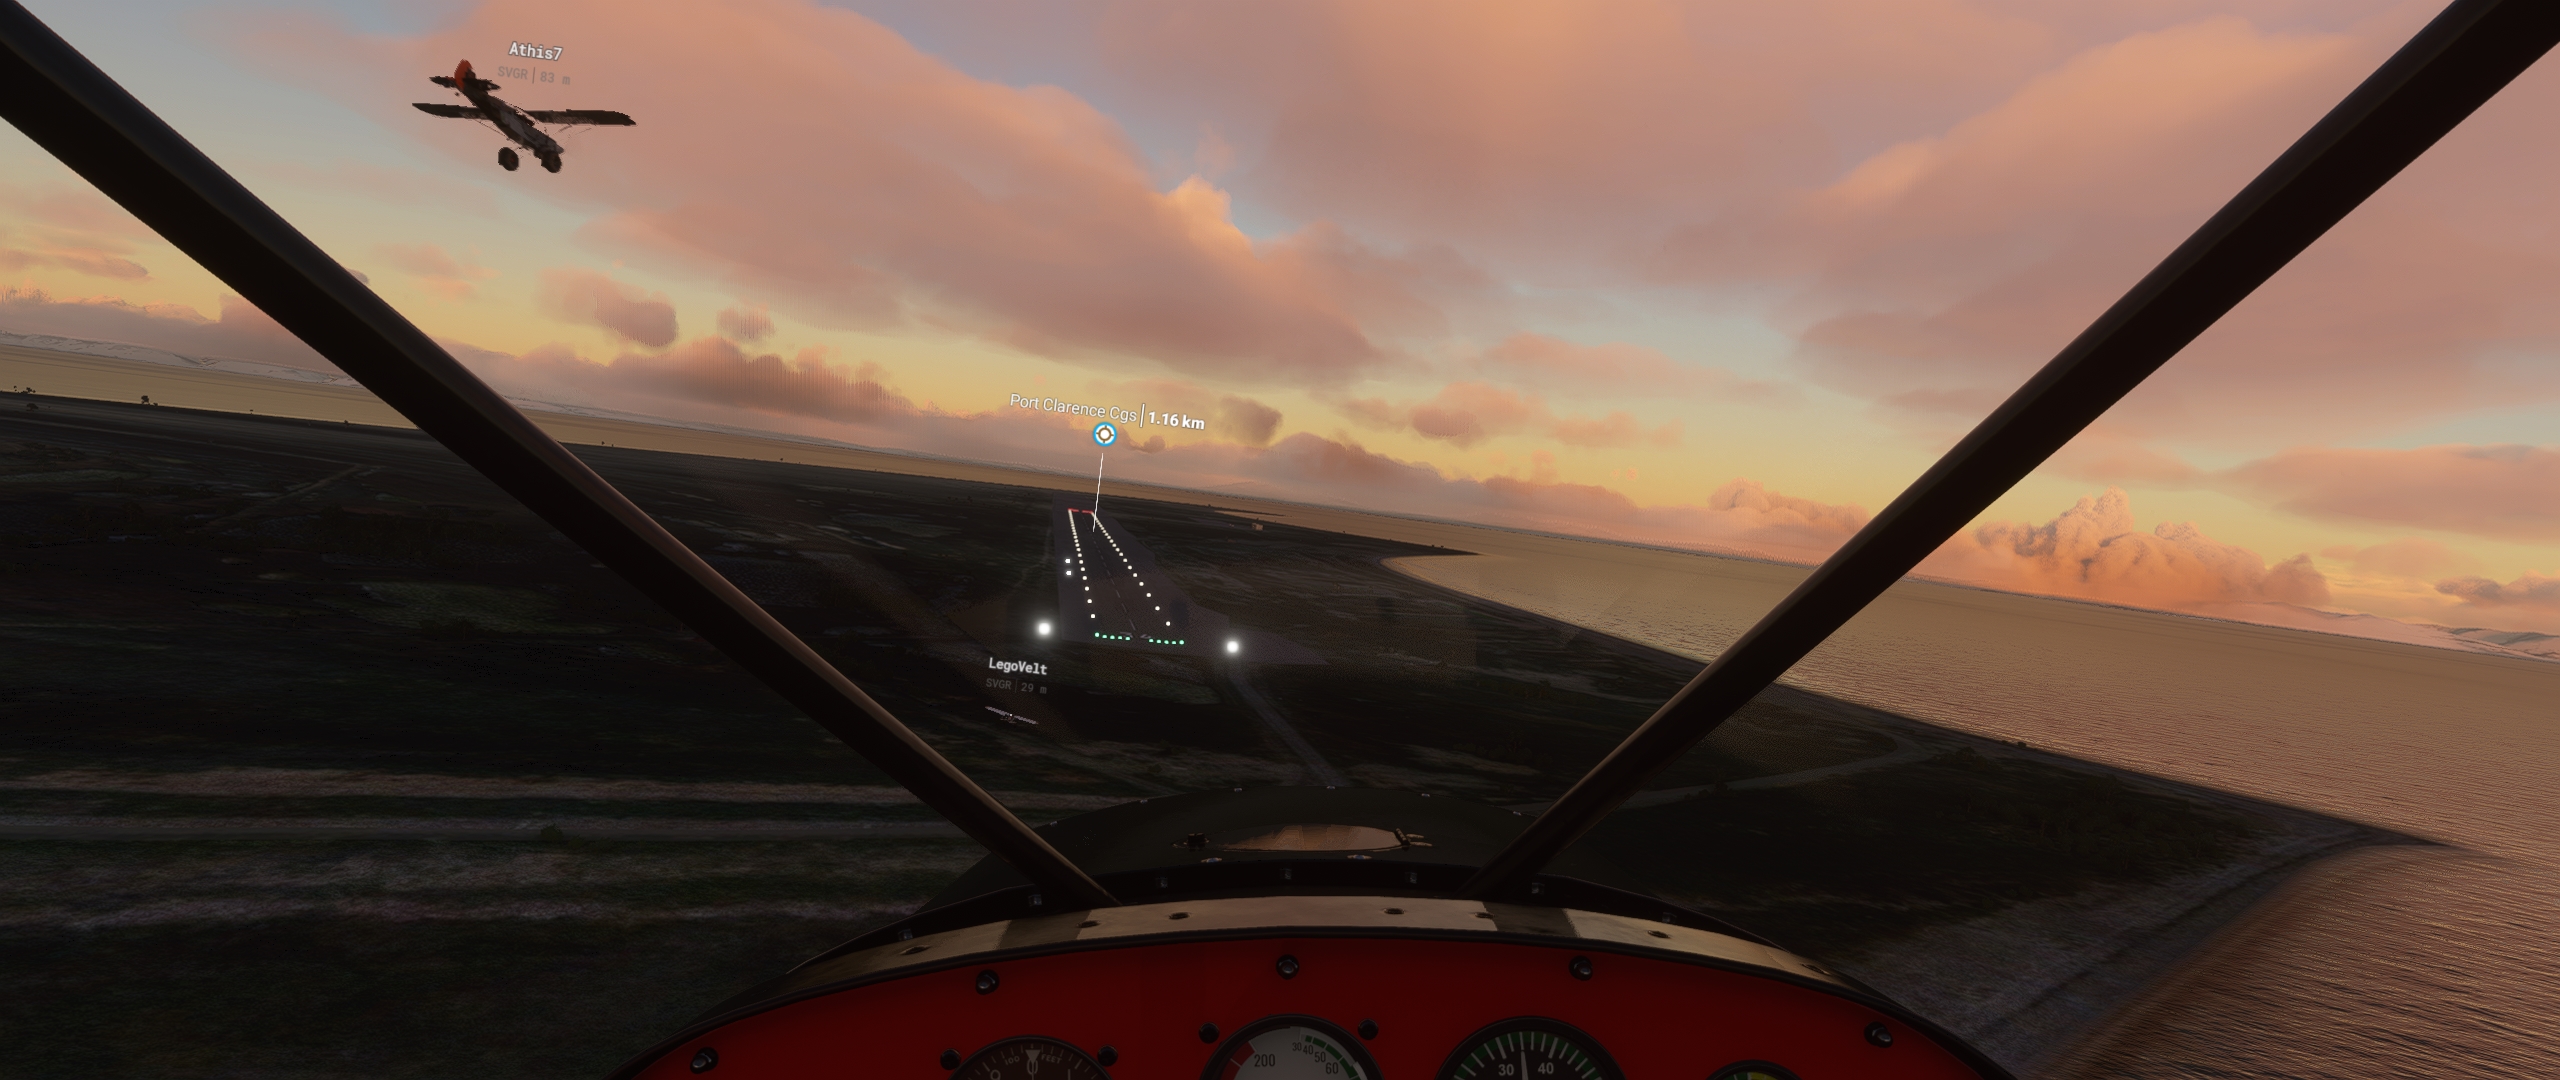 2021-01-09 18_43_41-Microsoft Flight Simulator - 1.12.13.0.jpg